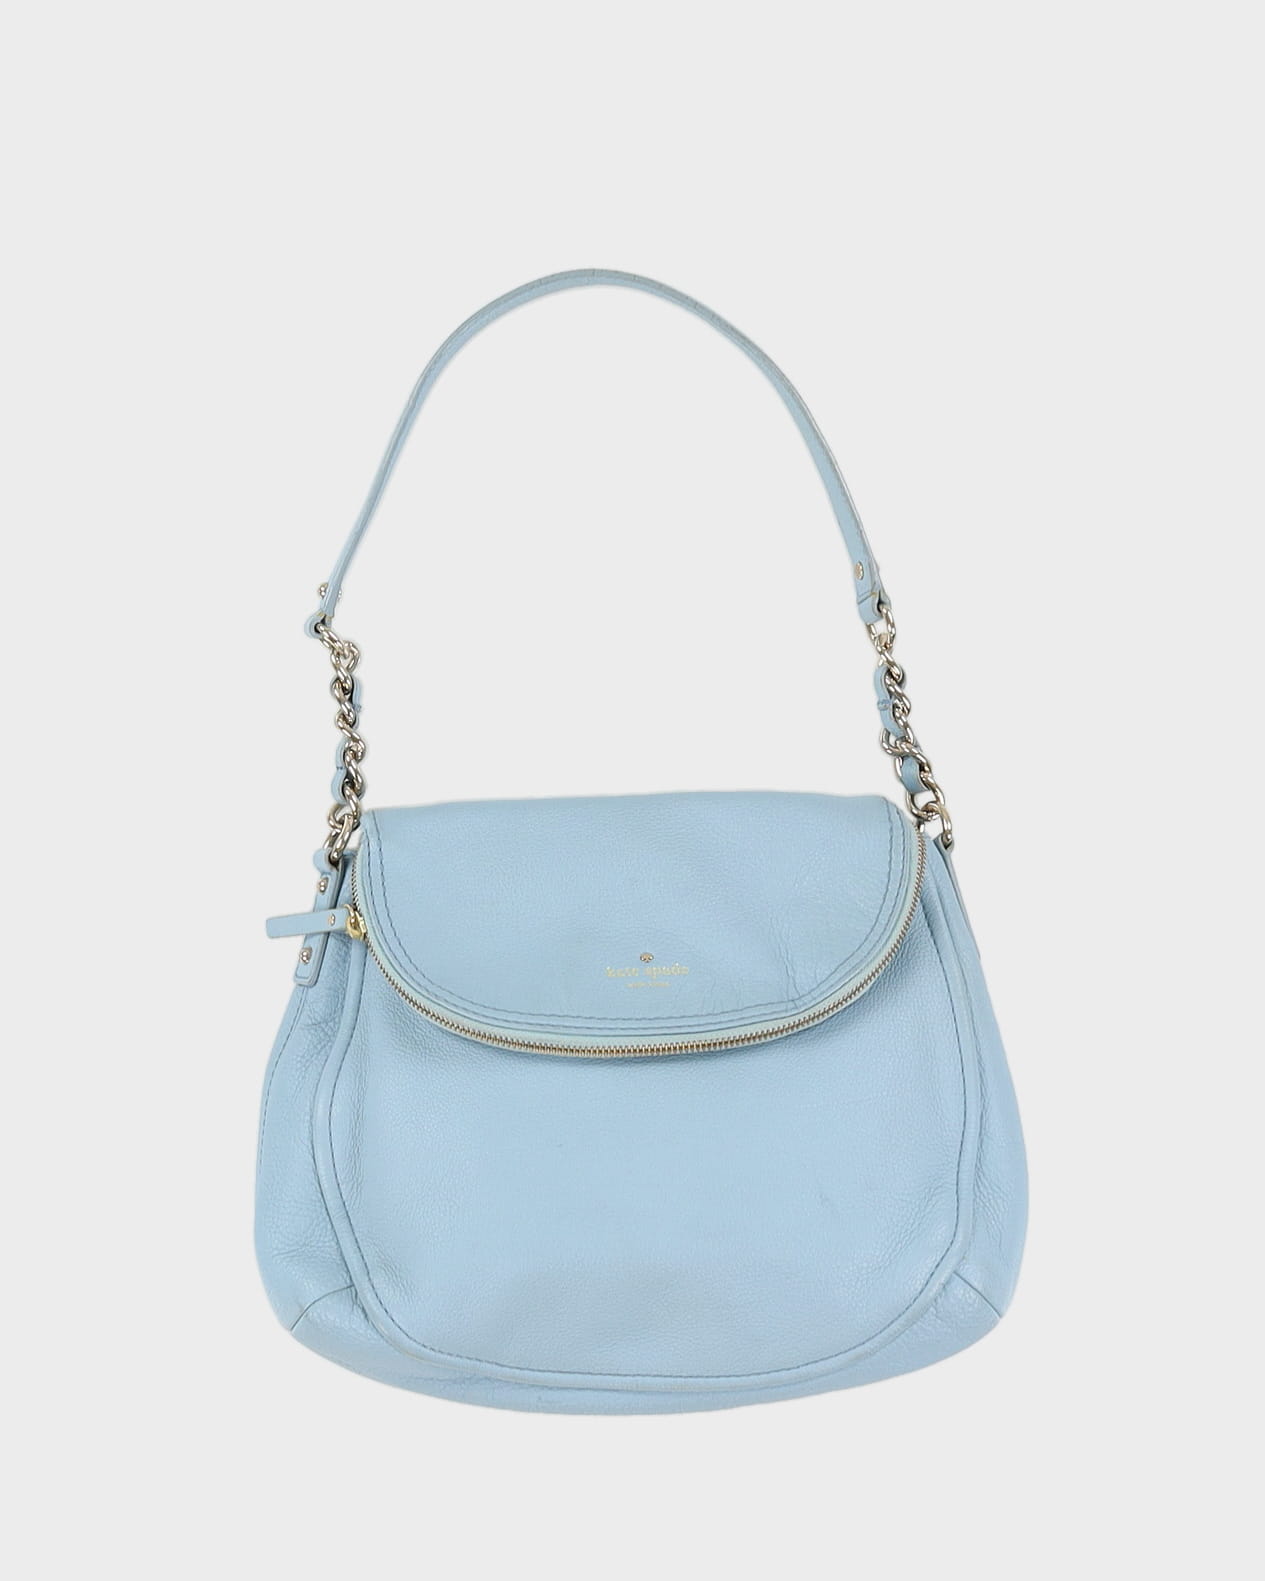 Kate Spade Blue Leather Handbag - One Size